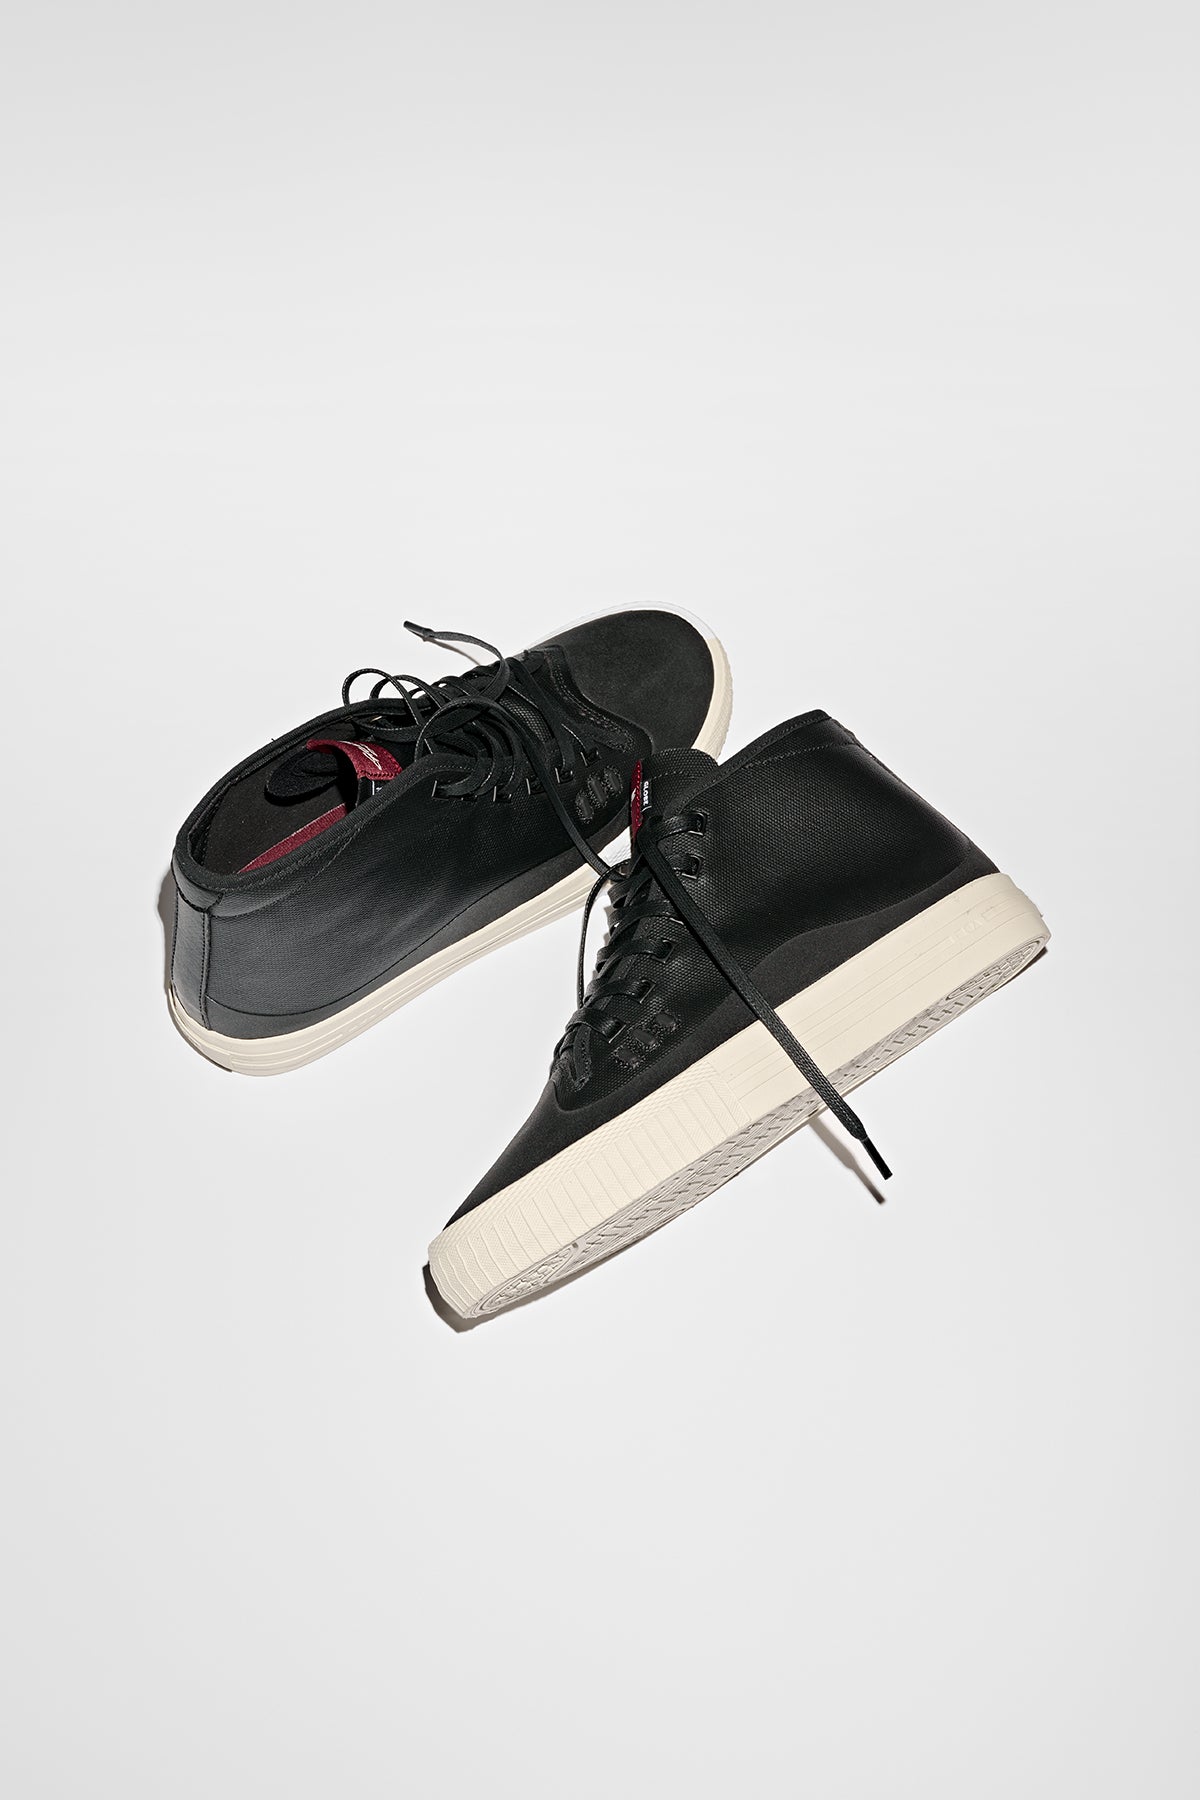 Globe - Gillette Mid - Preto/Creme - skateboard Sapatos